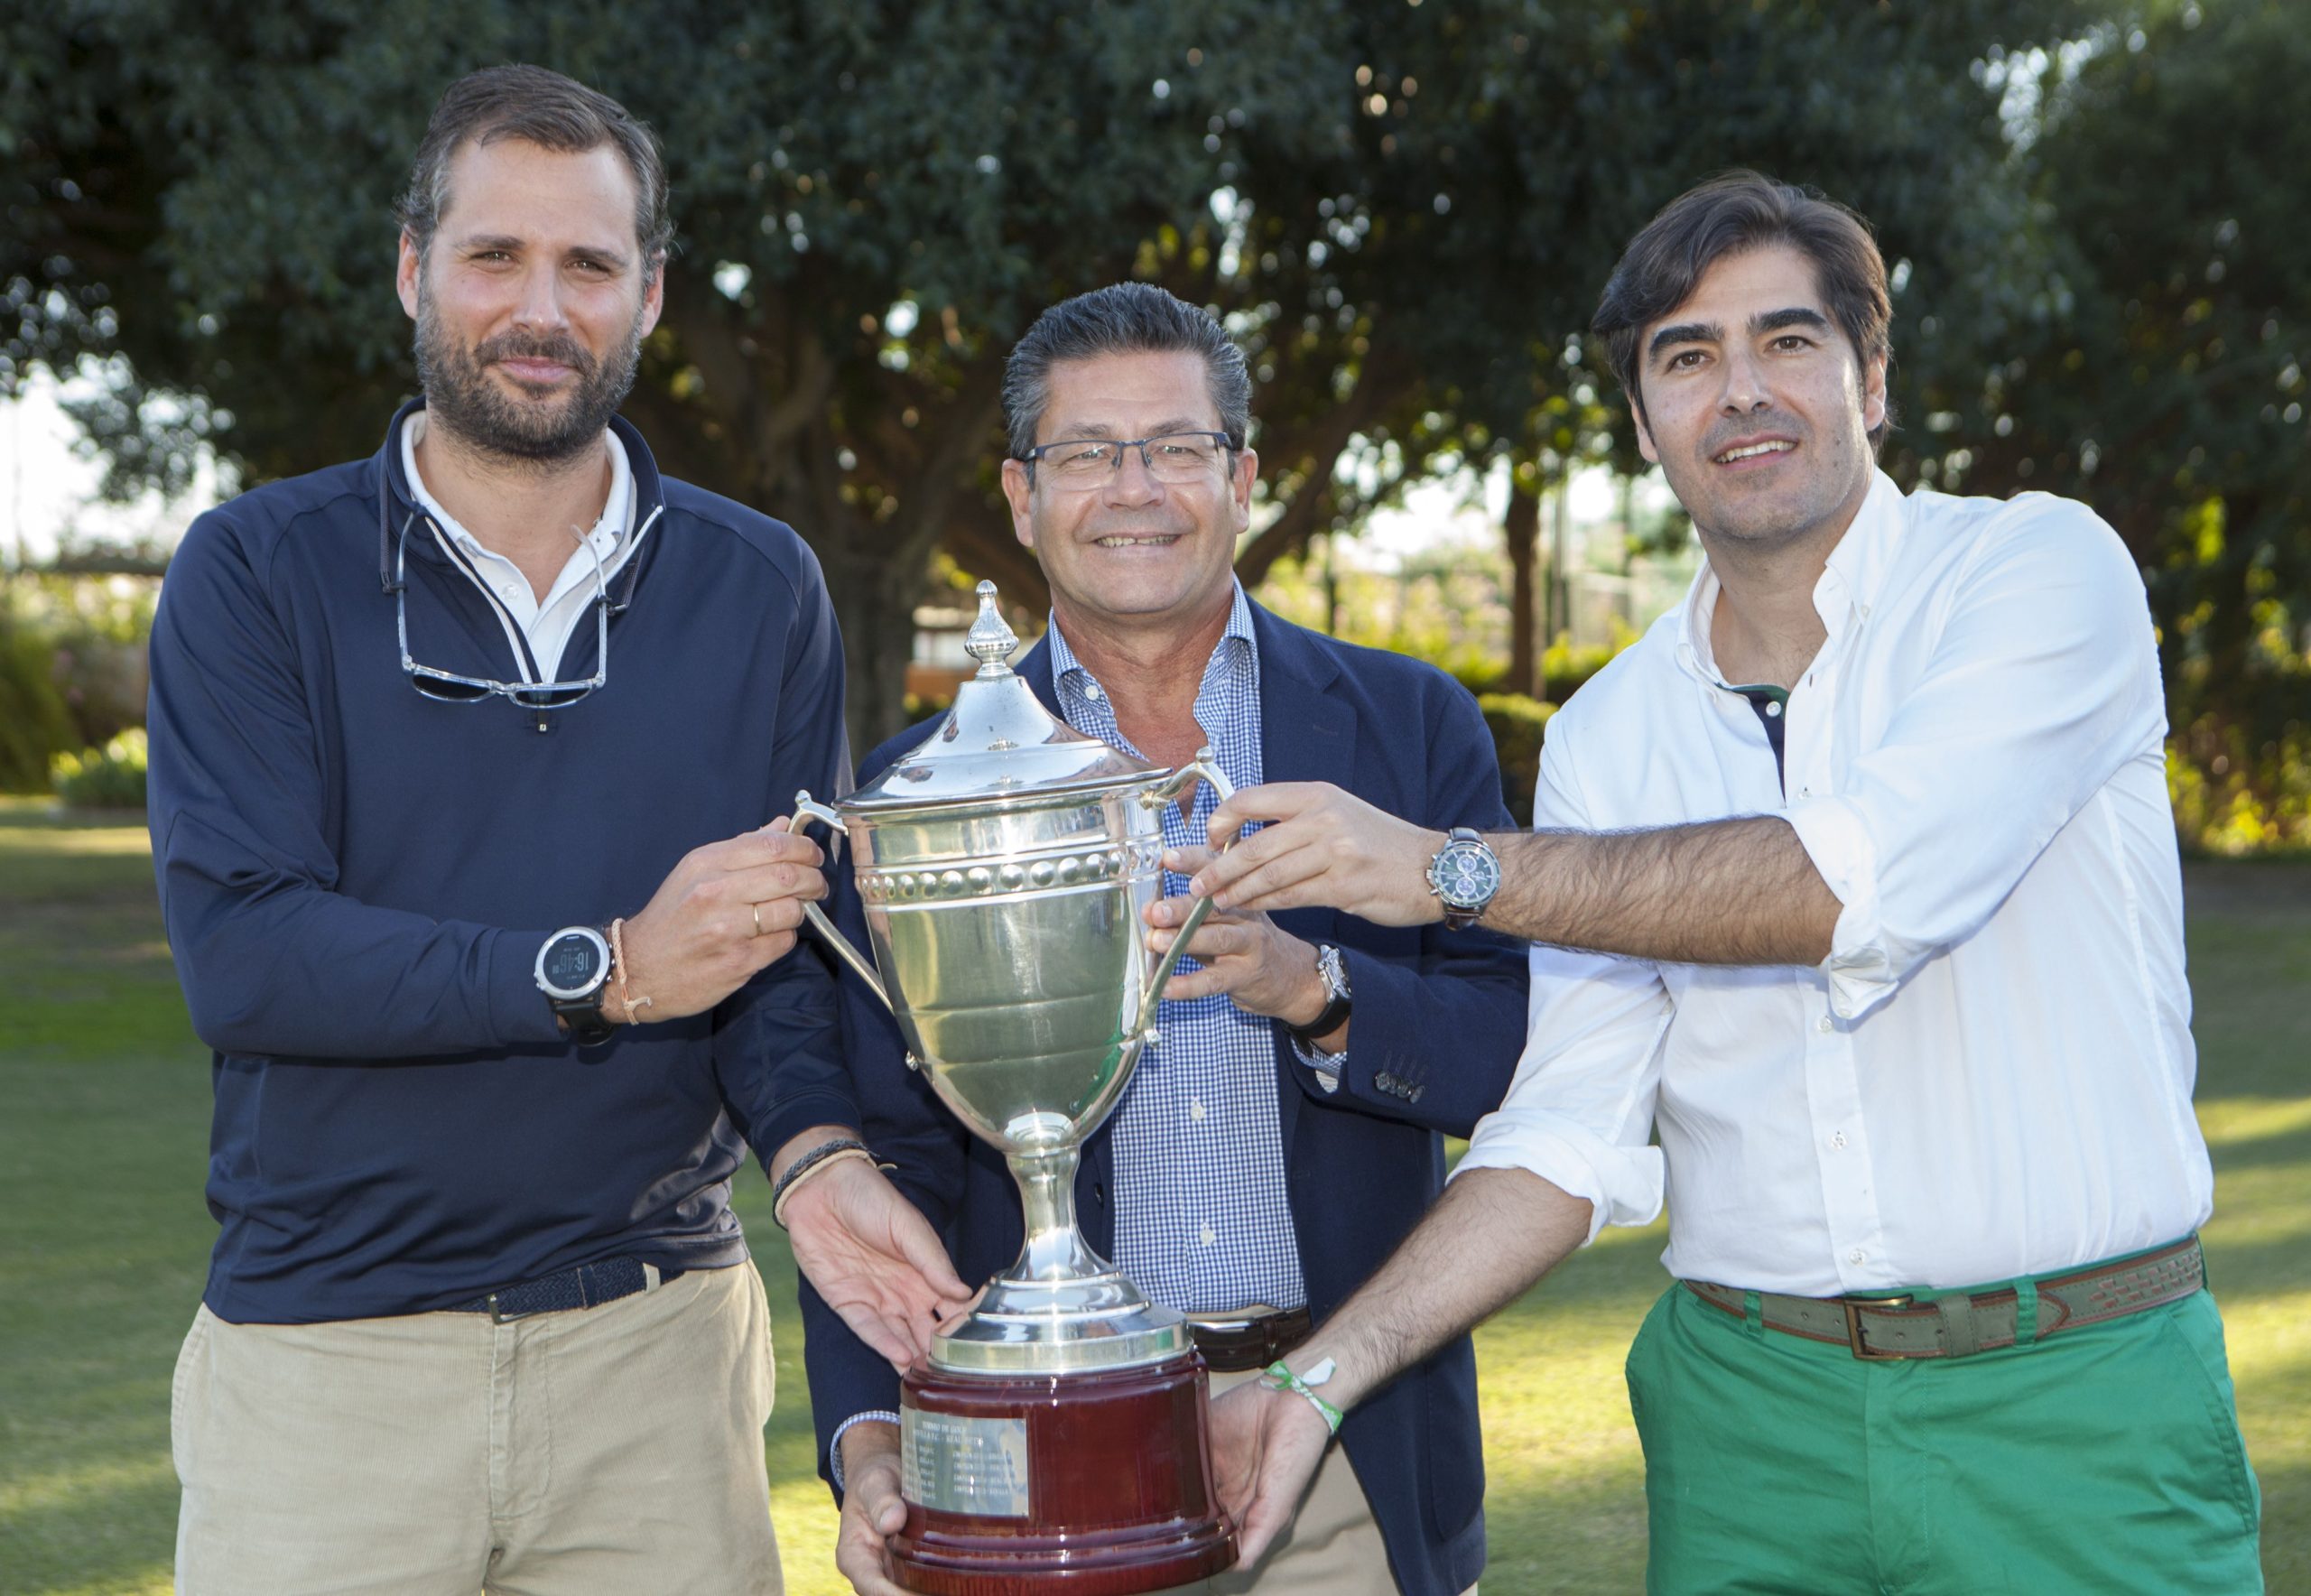 El equipo del Betis se proclama vencedor del torneo «THE CUP SEVILLA-BETIS 2017»  en el Real Club Sevilla Golf